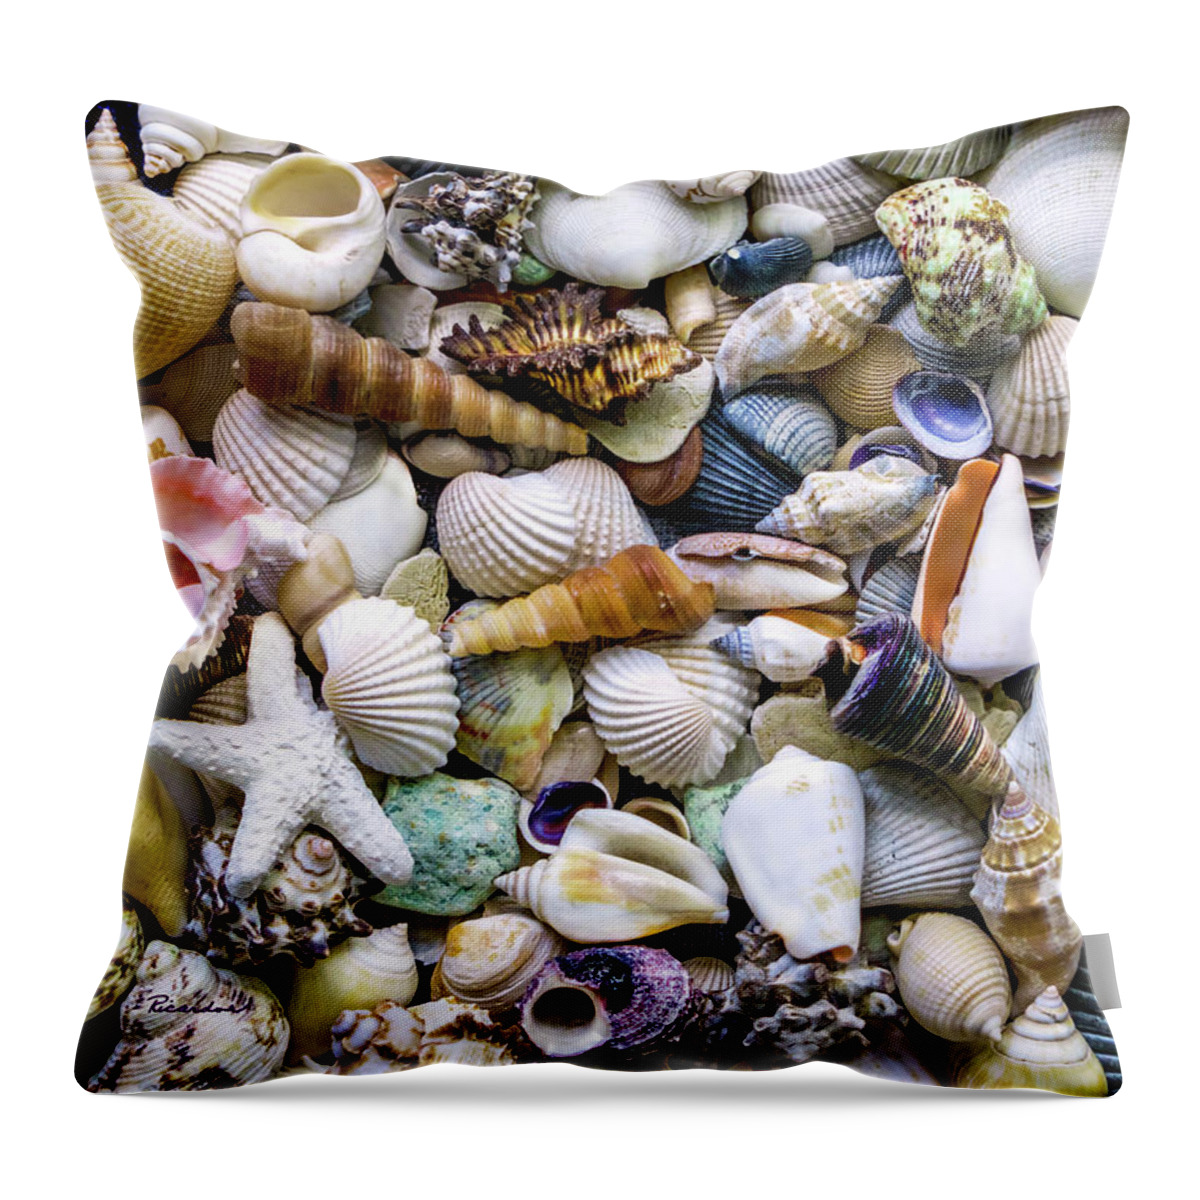 1500a Throw Pillow featuring the photograph Tropical Beach Seashell Treasures 1500A by Ricardos Creations